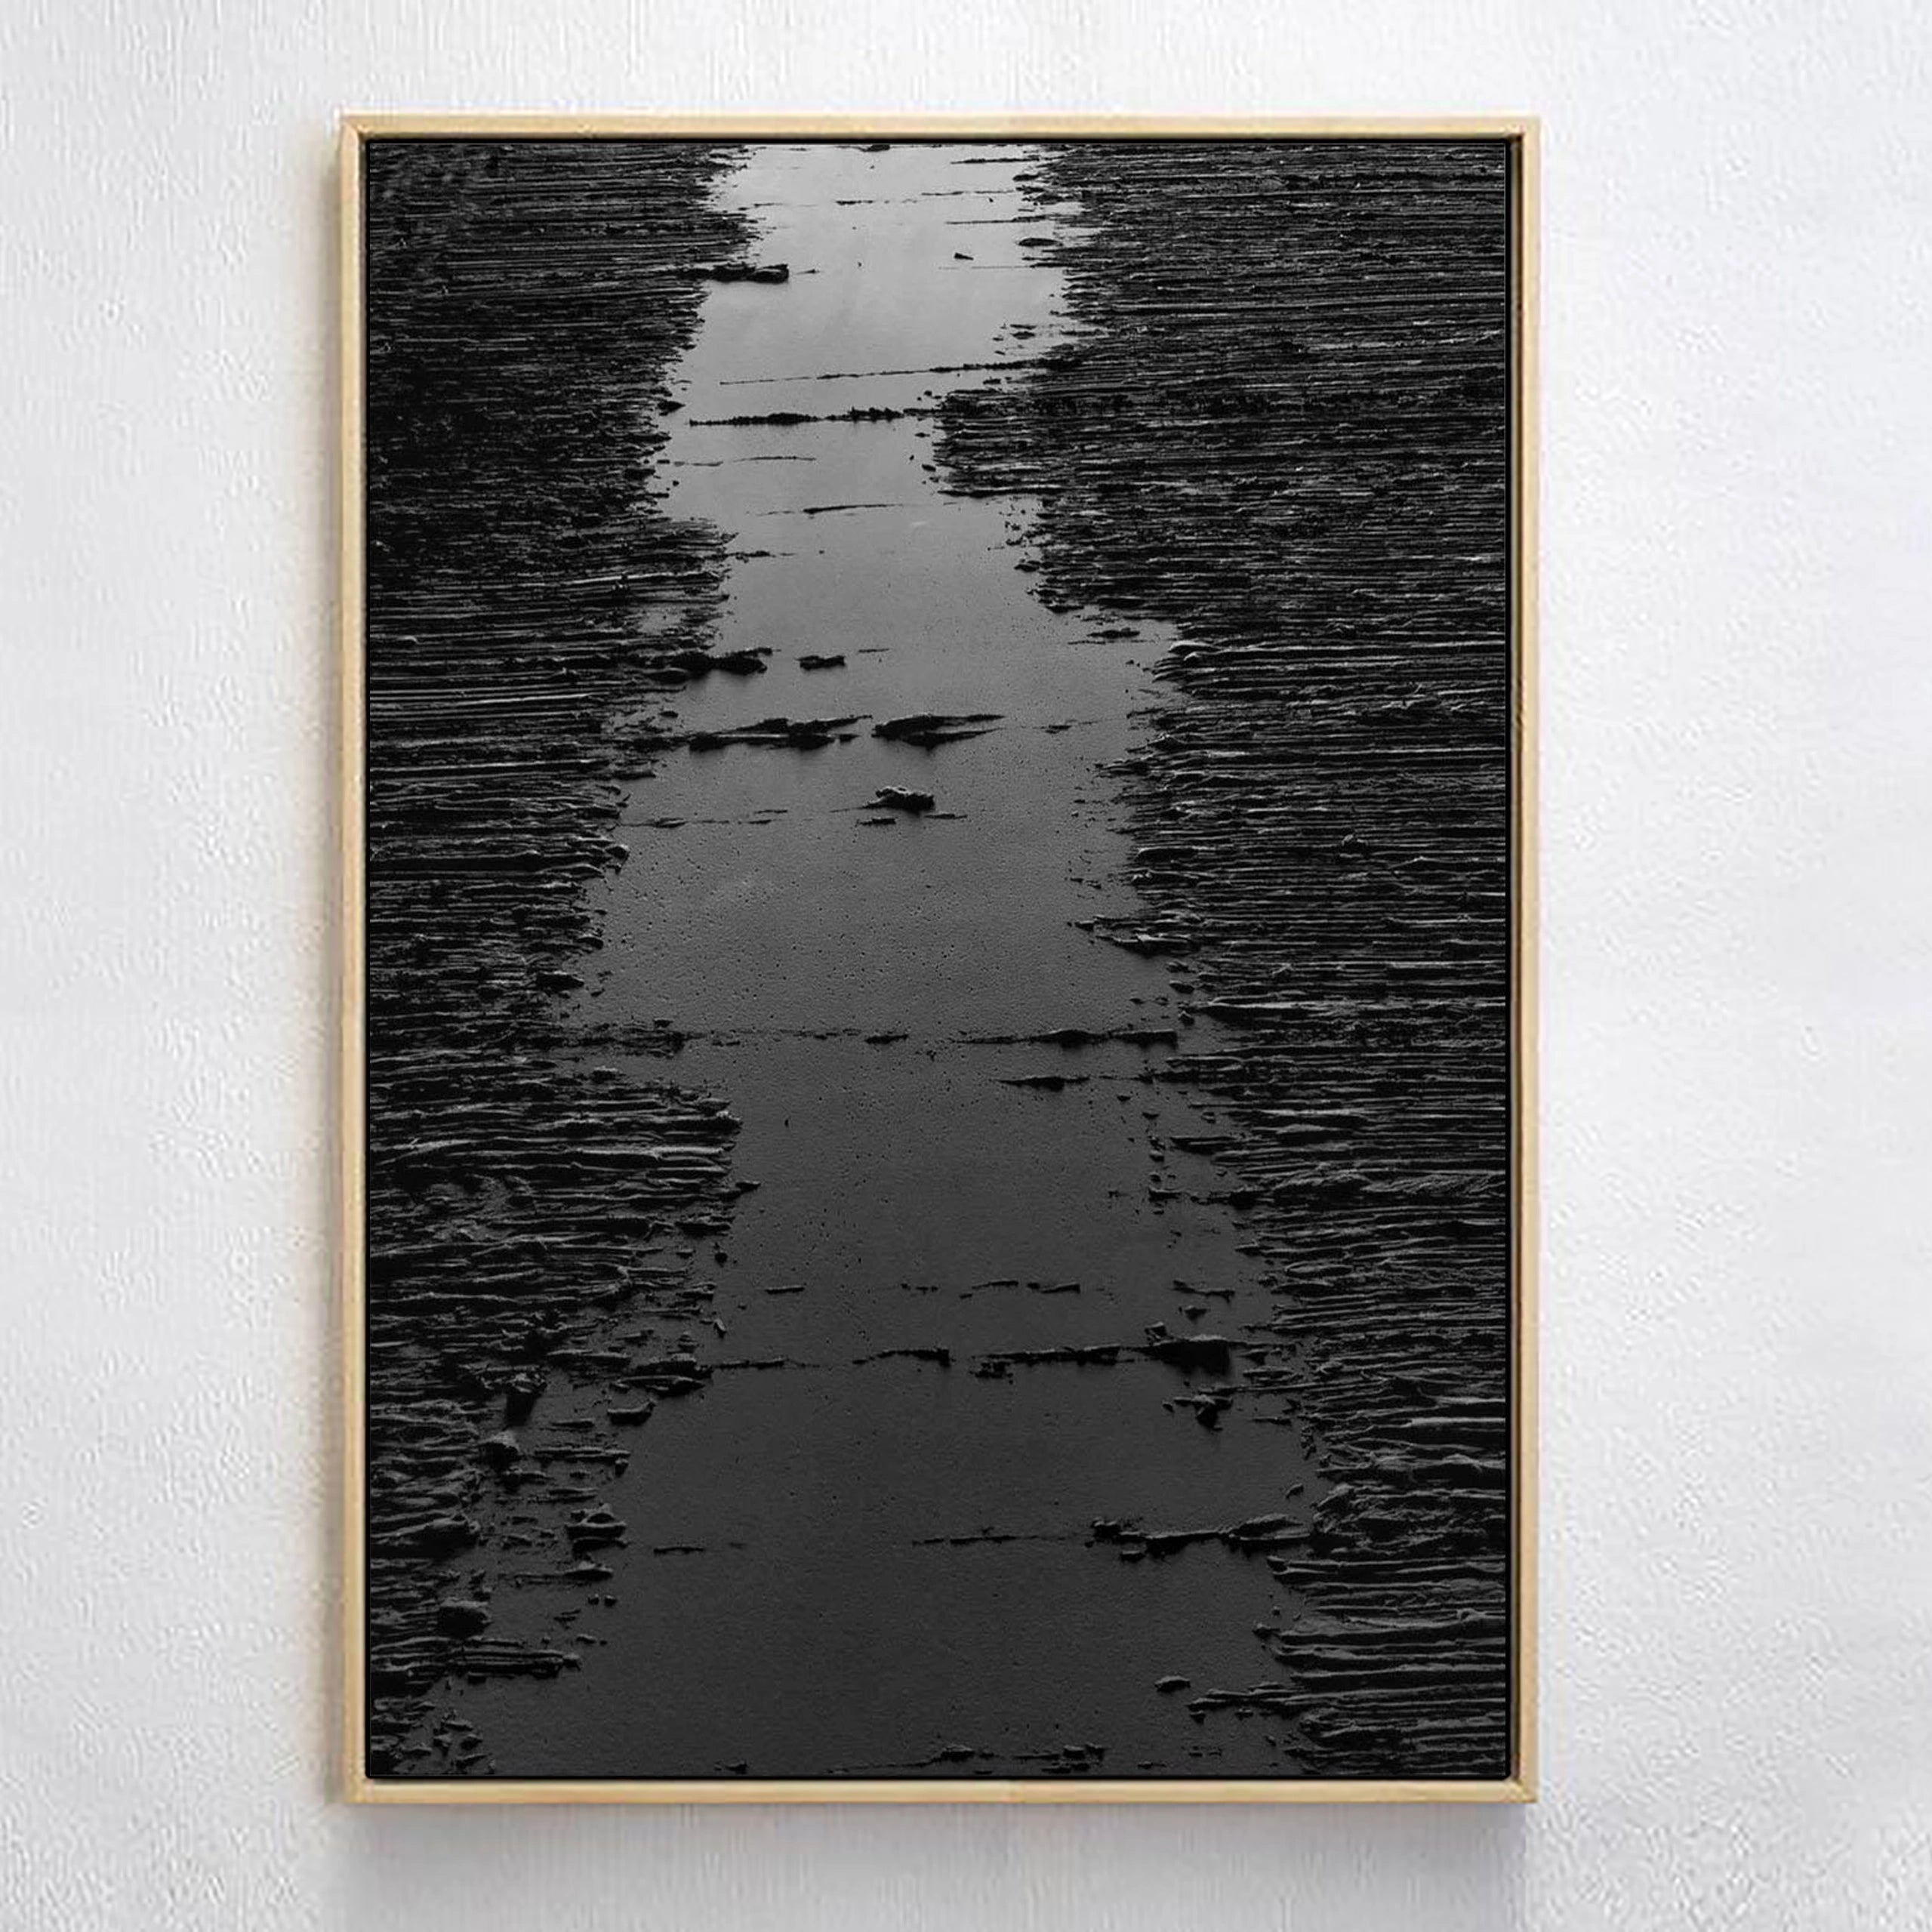 Black 3D Textured Minimalist River Canvas Wall Artwork Decor for Room